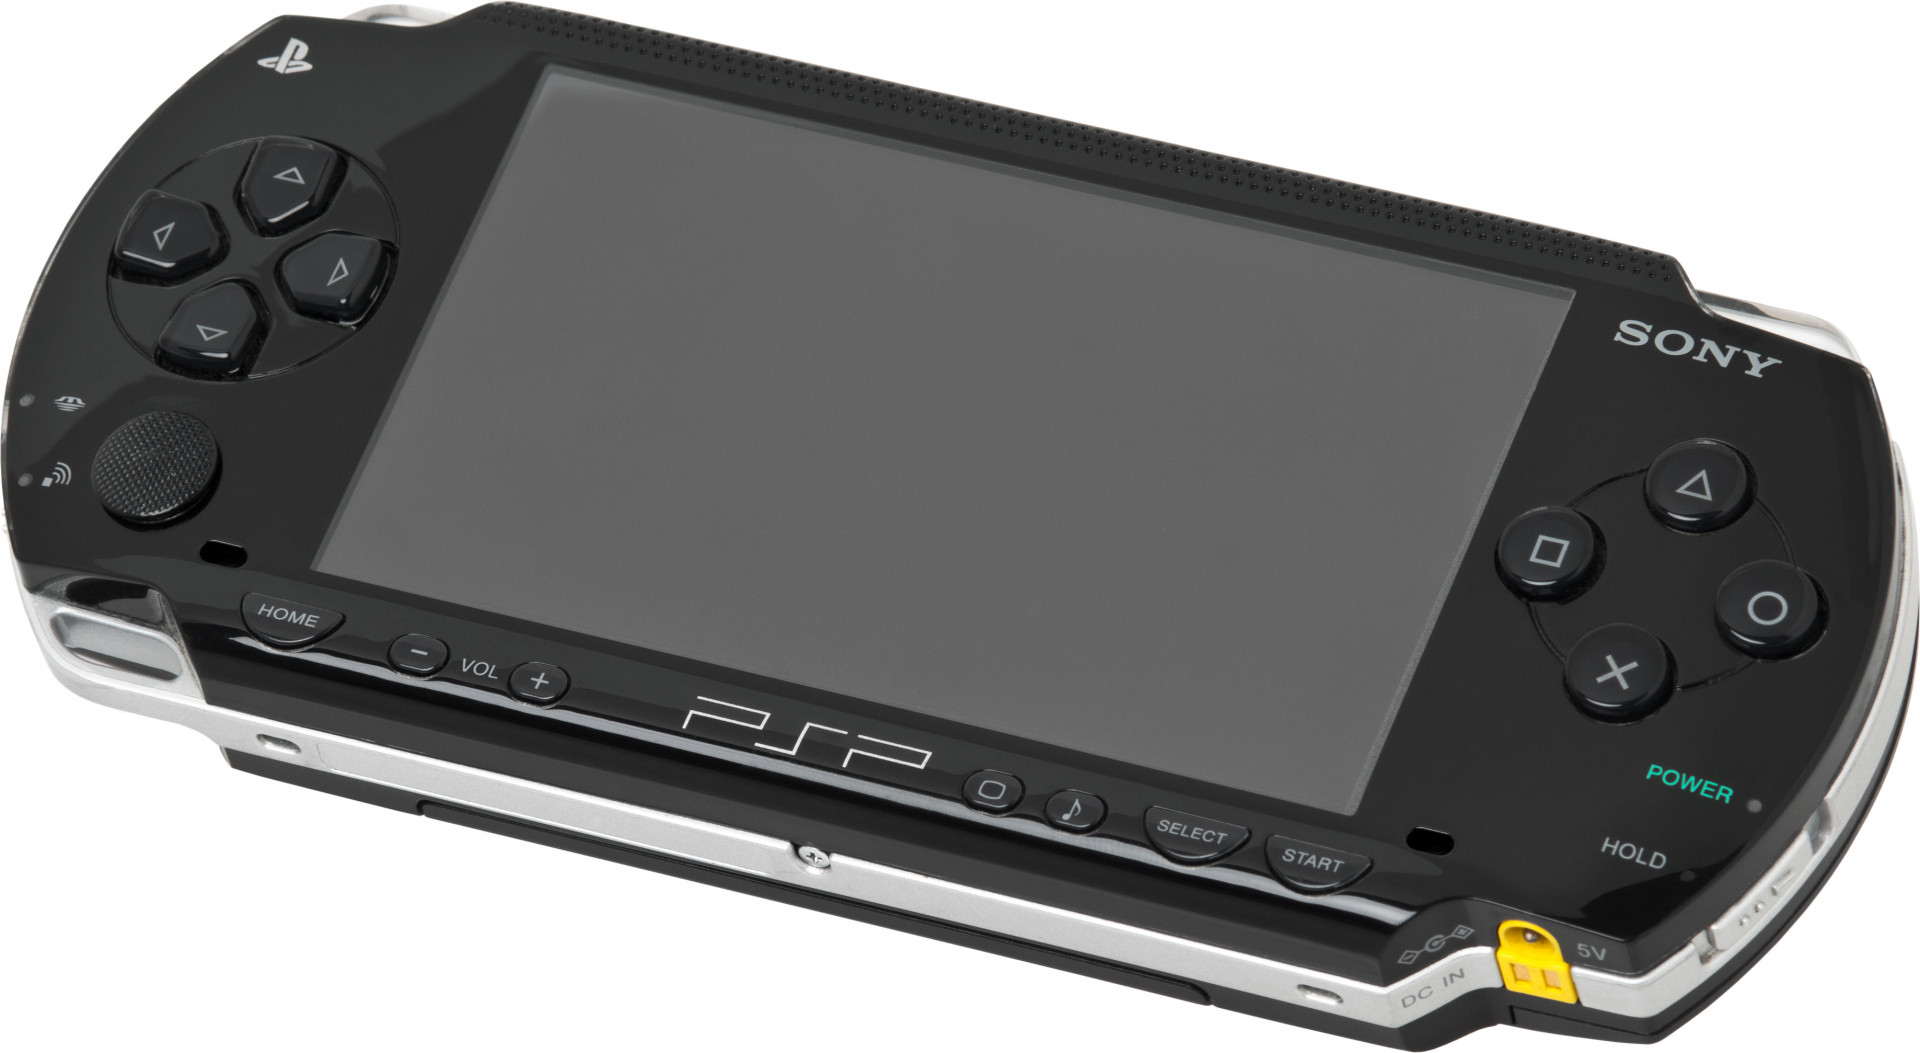 Sony Computer Entertainment Sony PSP 1000 Series (Black)